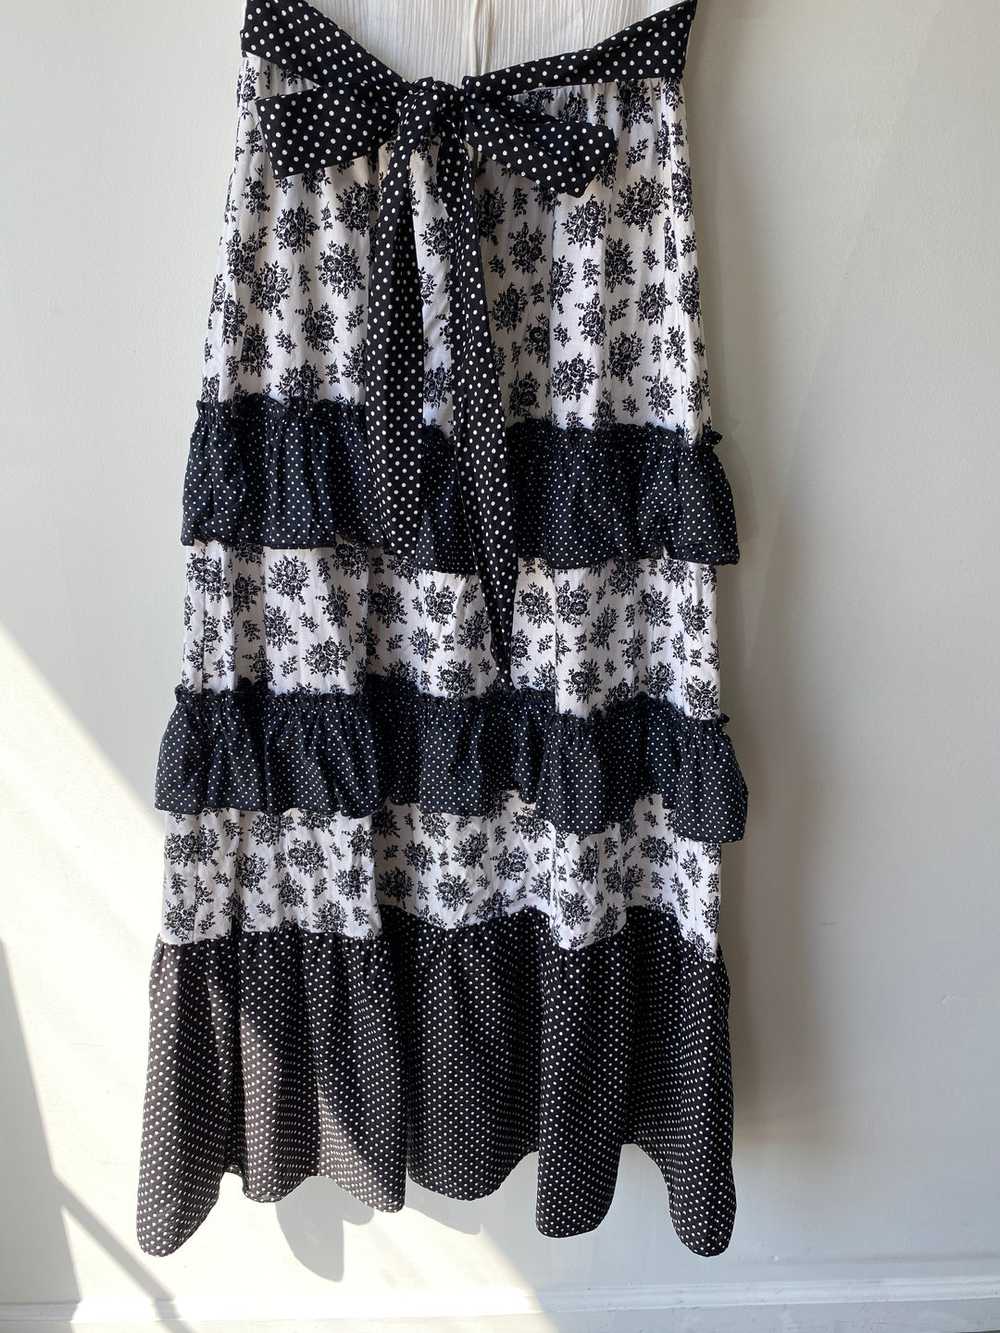 Vintage Black and White Prairie Dress - image 3